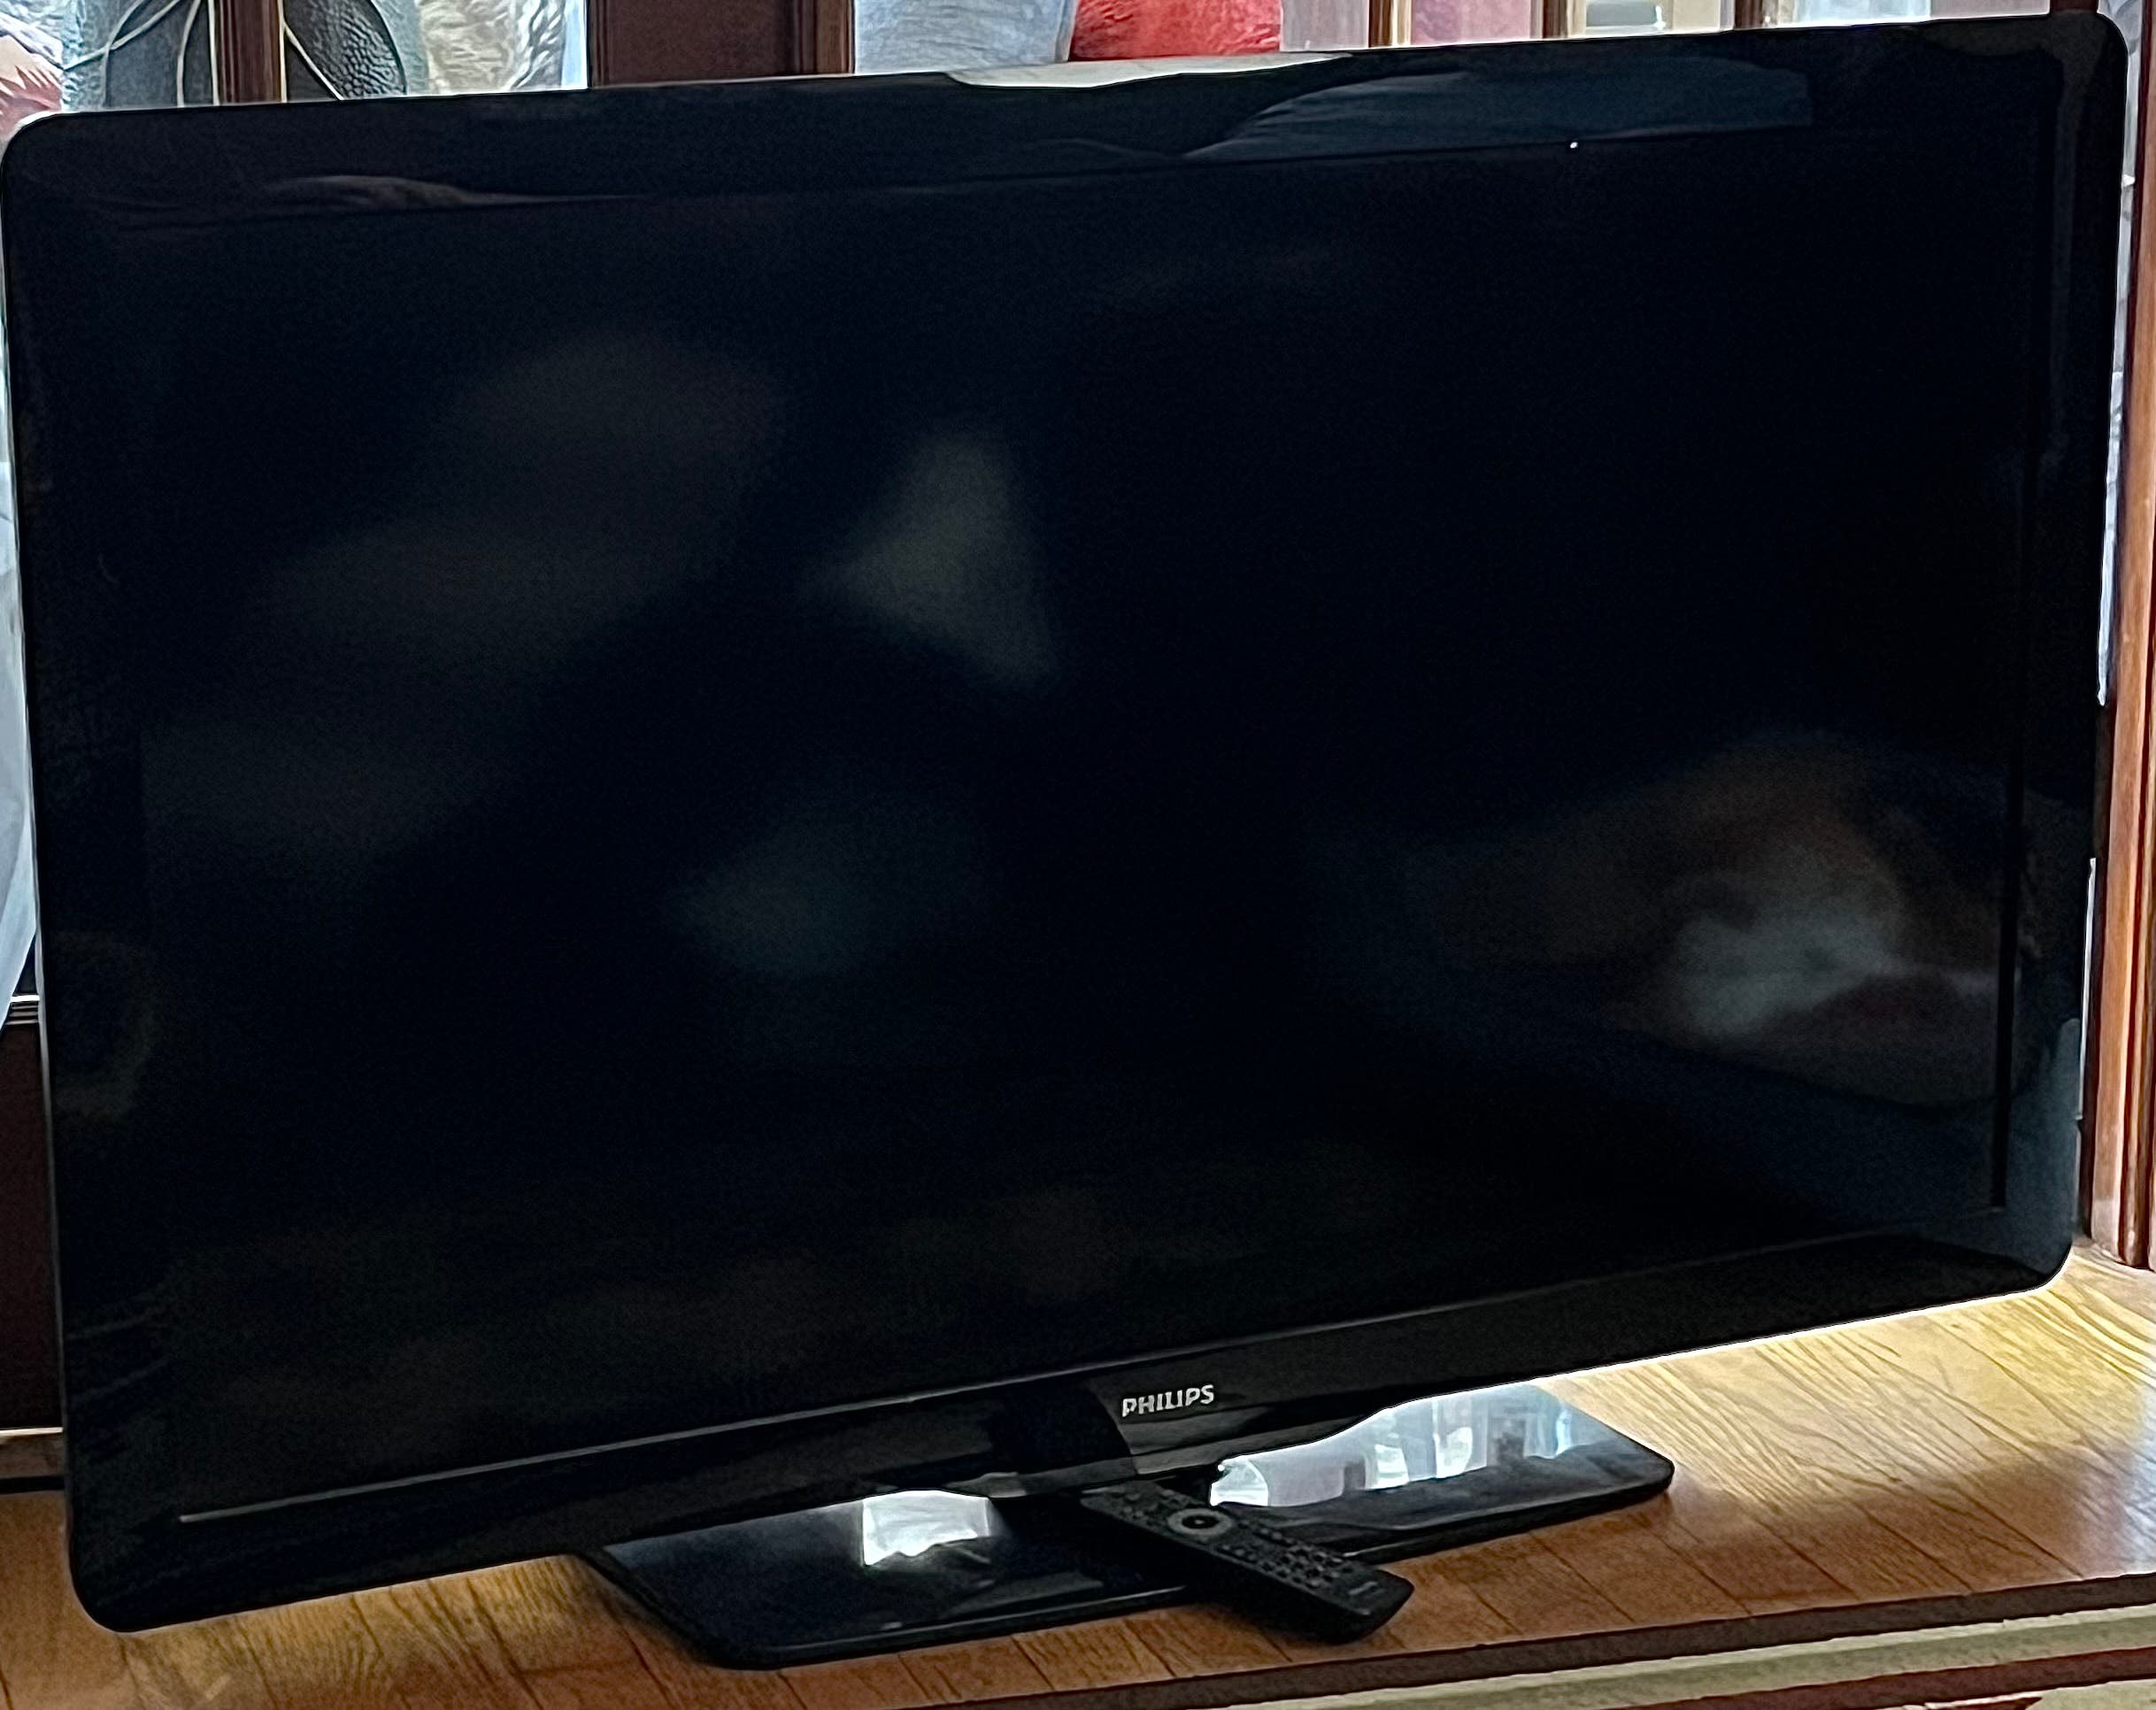 Phillips Magnavox 43” NON smart TV.  Perfect working condition.